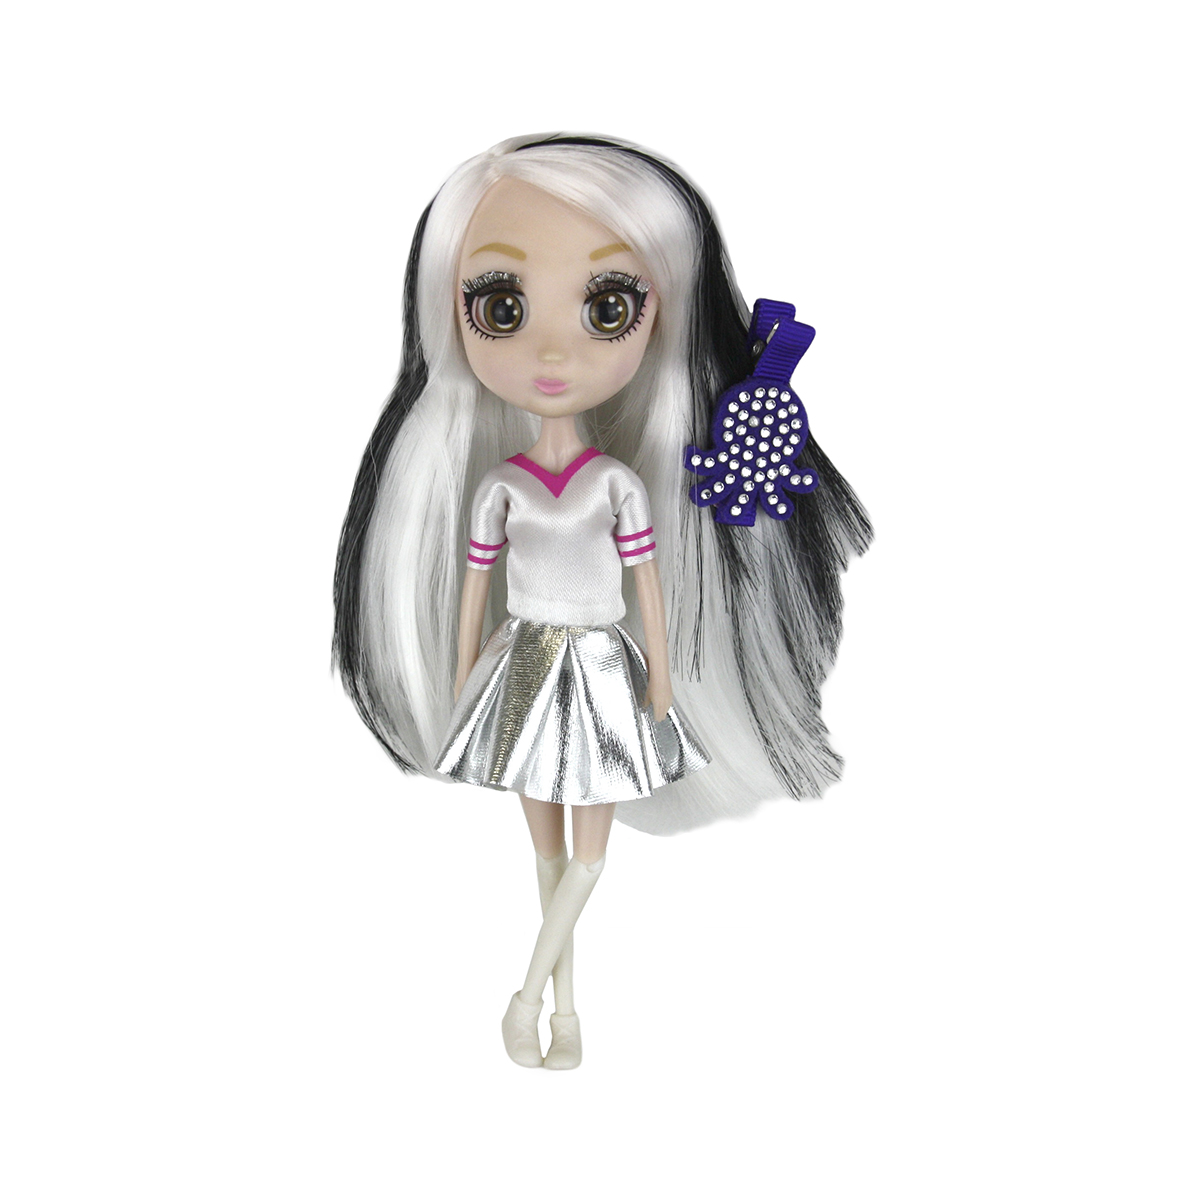 Кукла SHIBAJUKU серии "Мини" - МИКИ (15 см, 6 точек артикуляции, с аксессуаром)